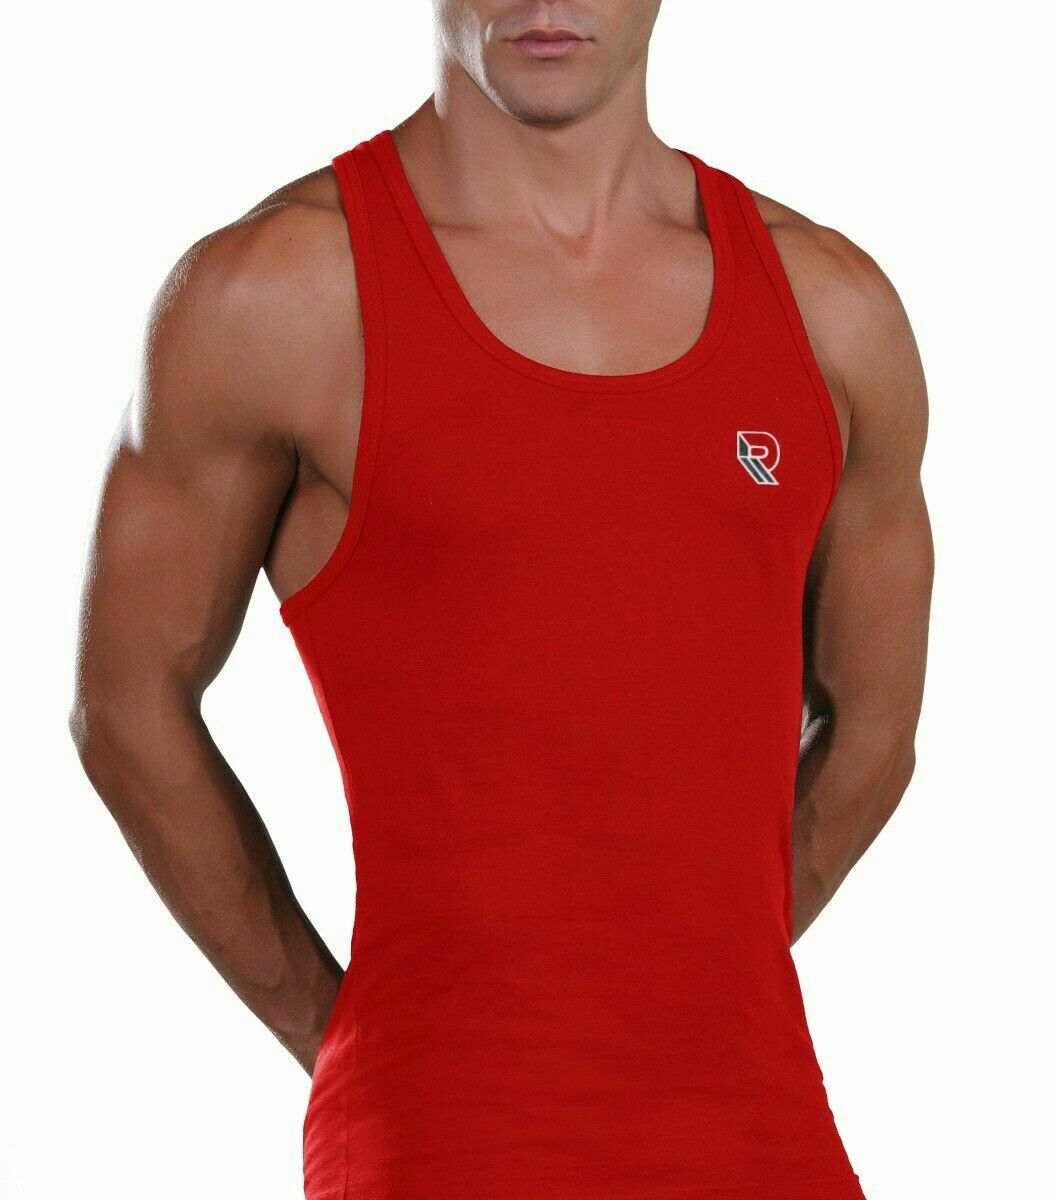 Gym Men's Muscle Sleeveless Tank Top T-Shirt Bodybuilding Sport Gym Vest Fitness Repton Fitness Gear